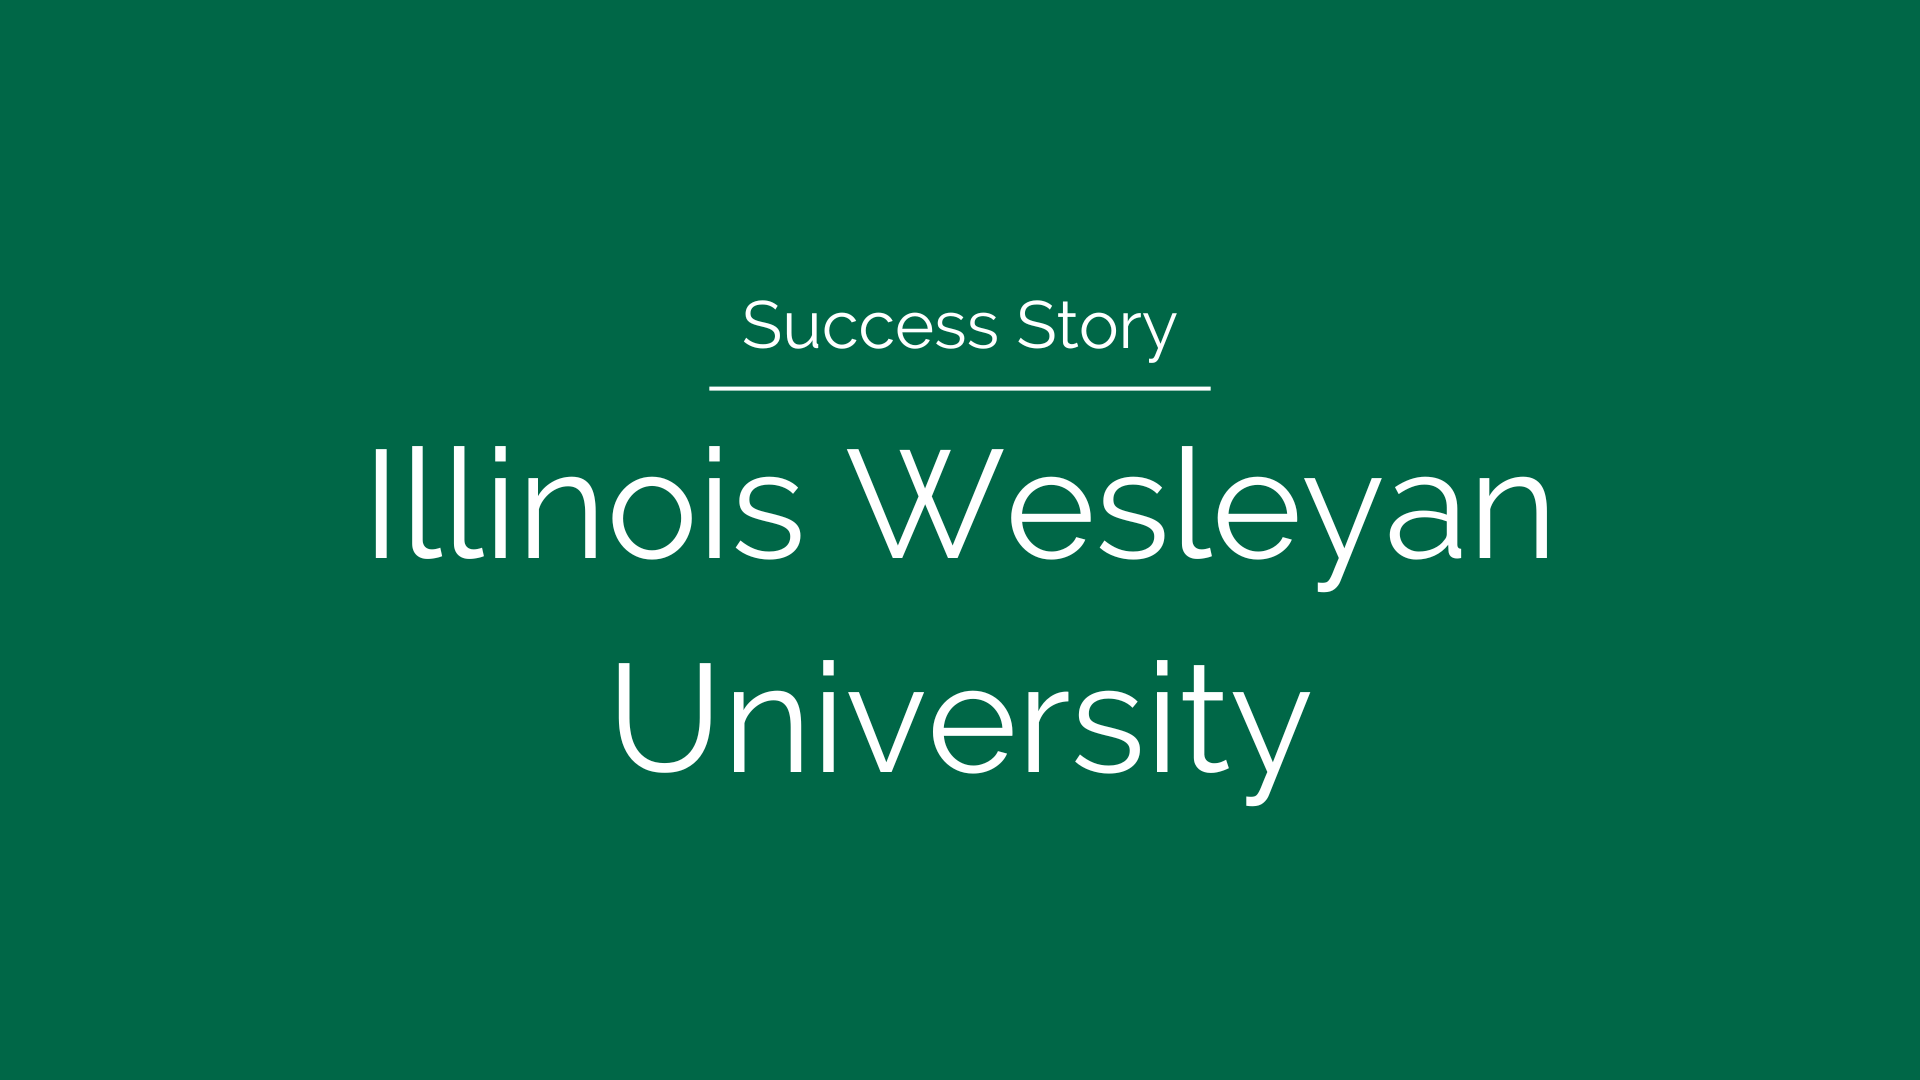 Success Story: Illinois Wesleyan University